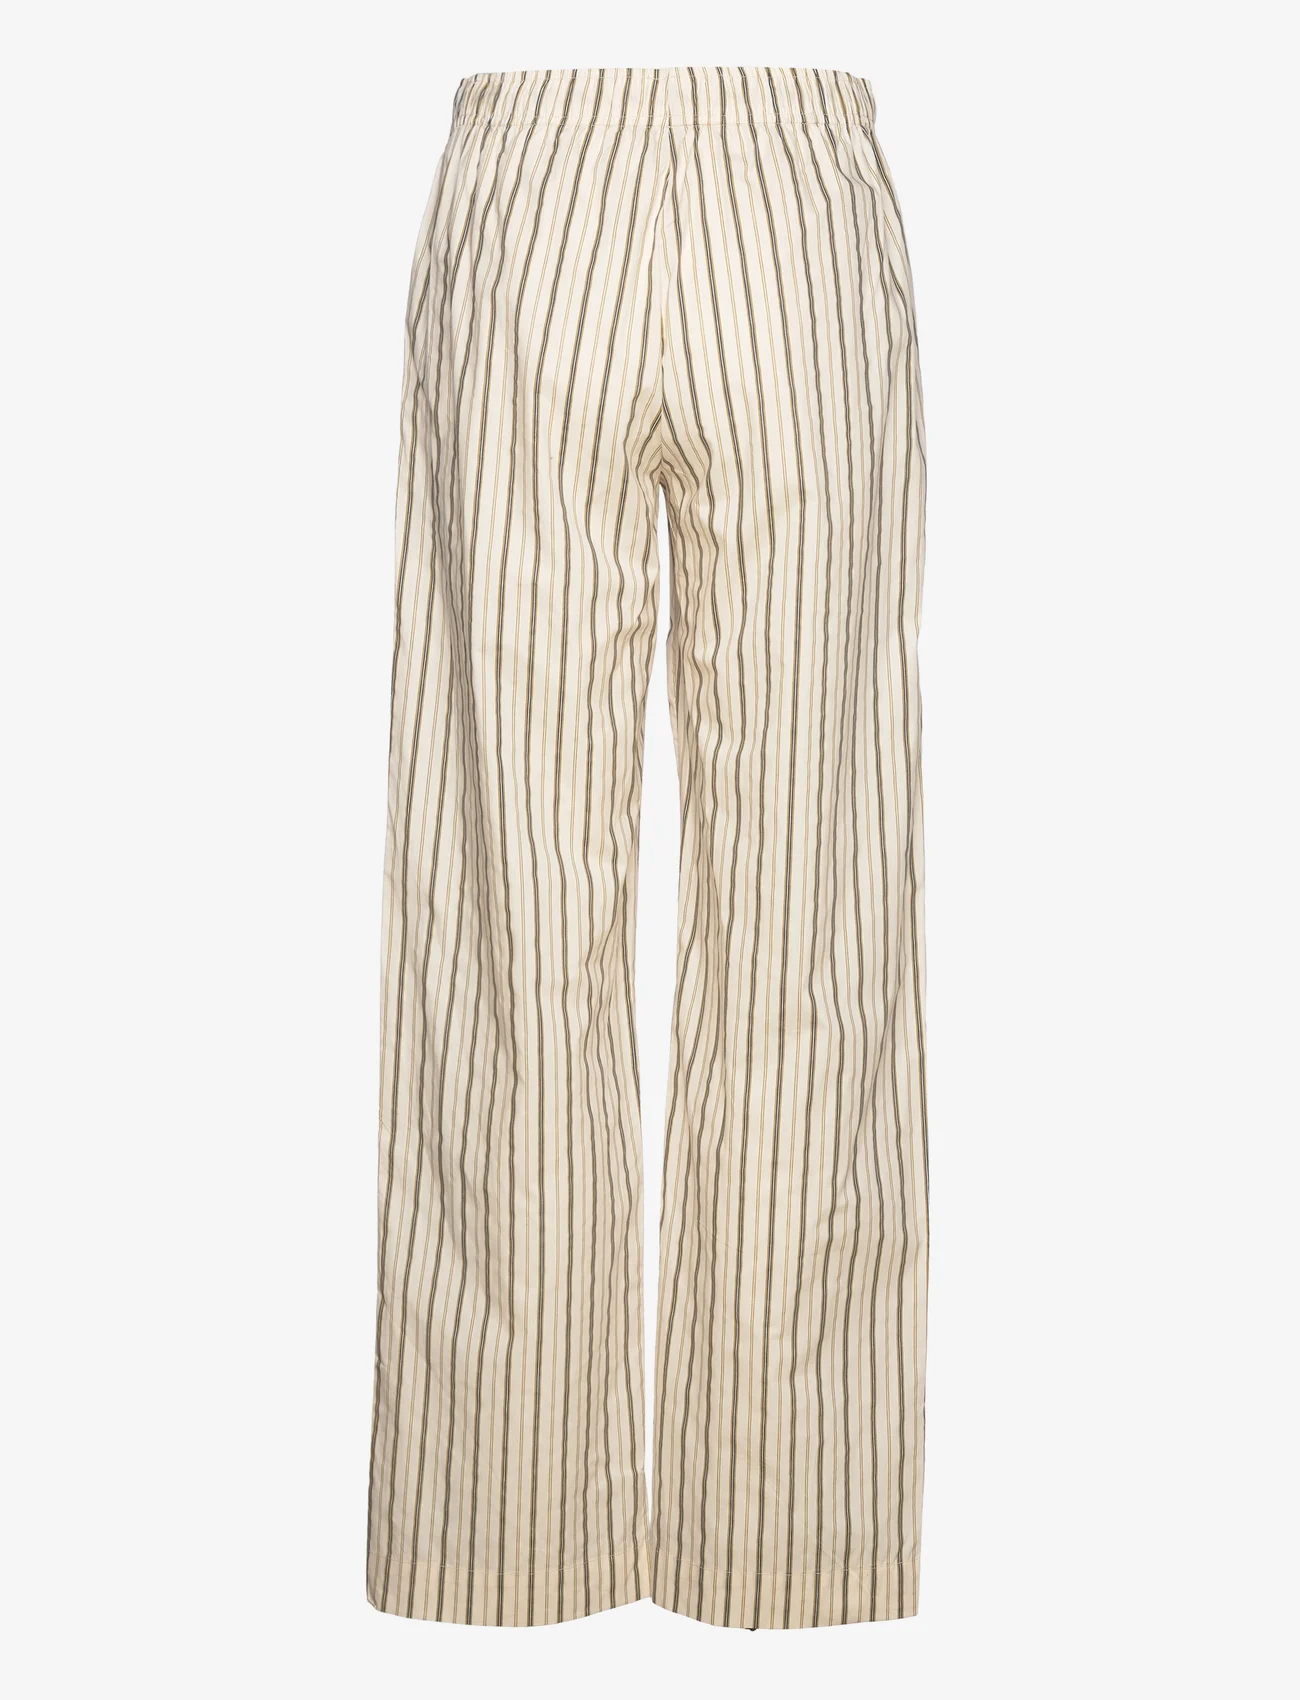 Sofie Schnoor - Trousers - leveälahkeiset housut - off white striped - 1